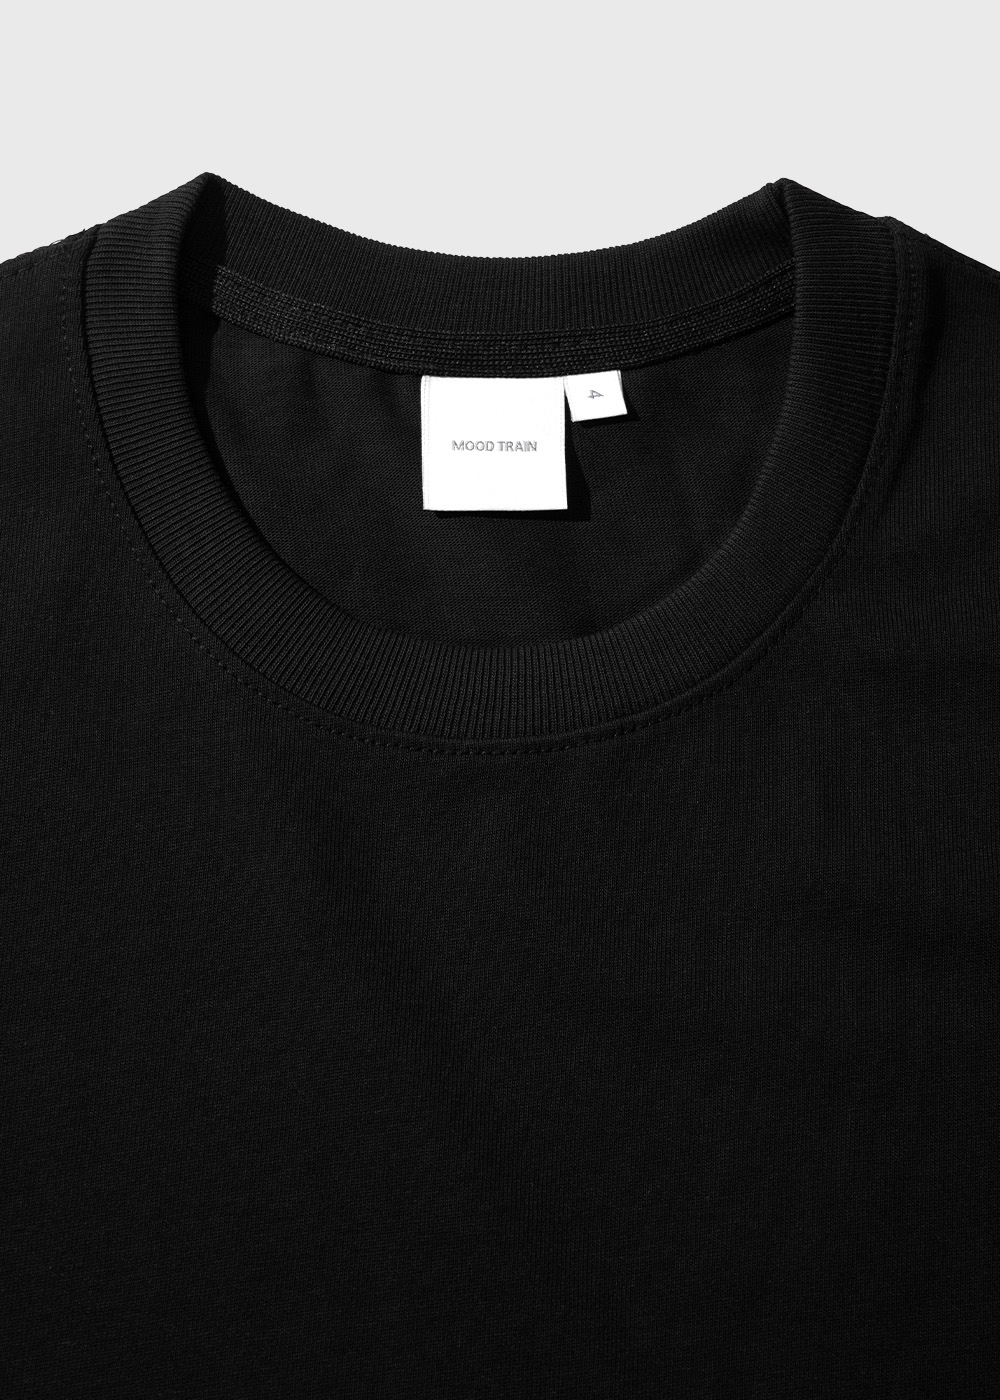 B. Silked Combed Cotton 100% 30/2 Single T-shirt _ black